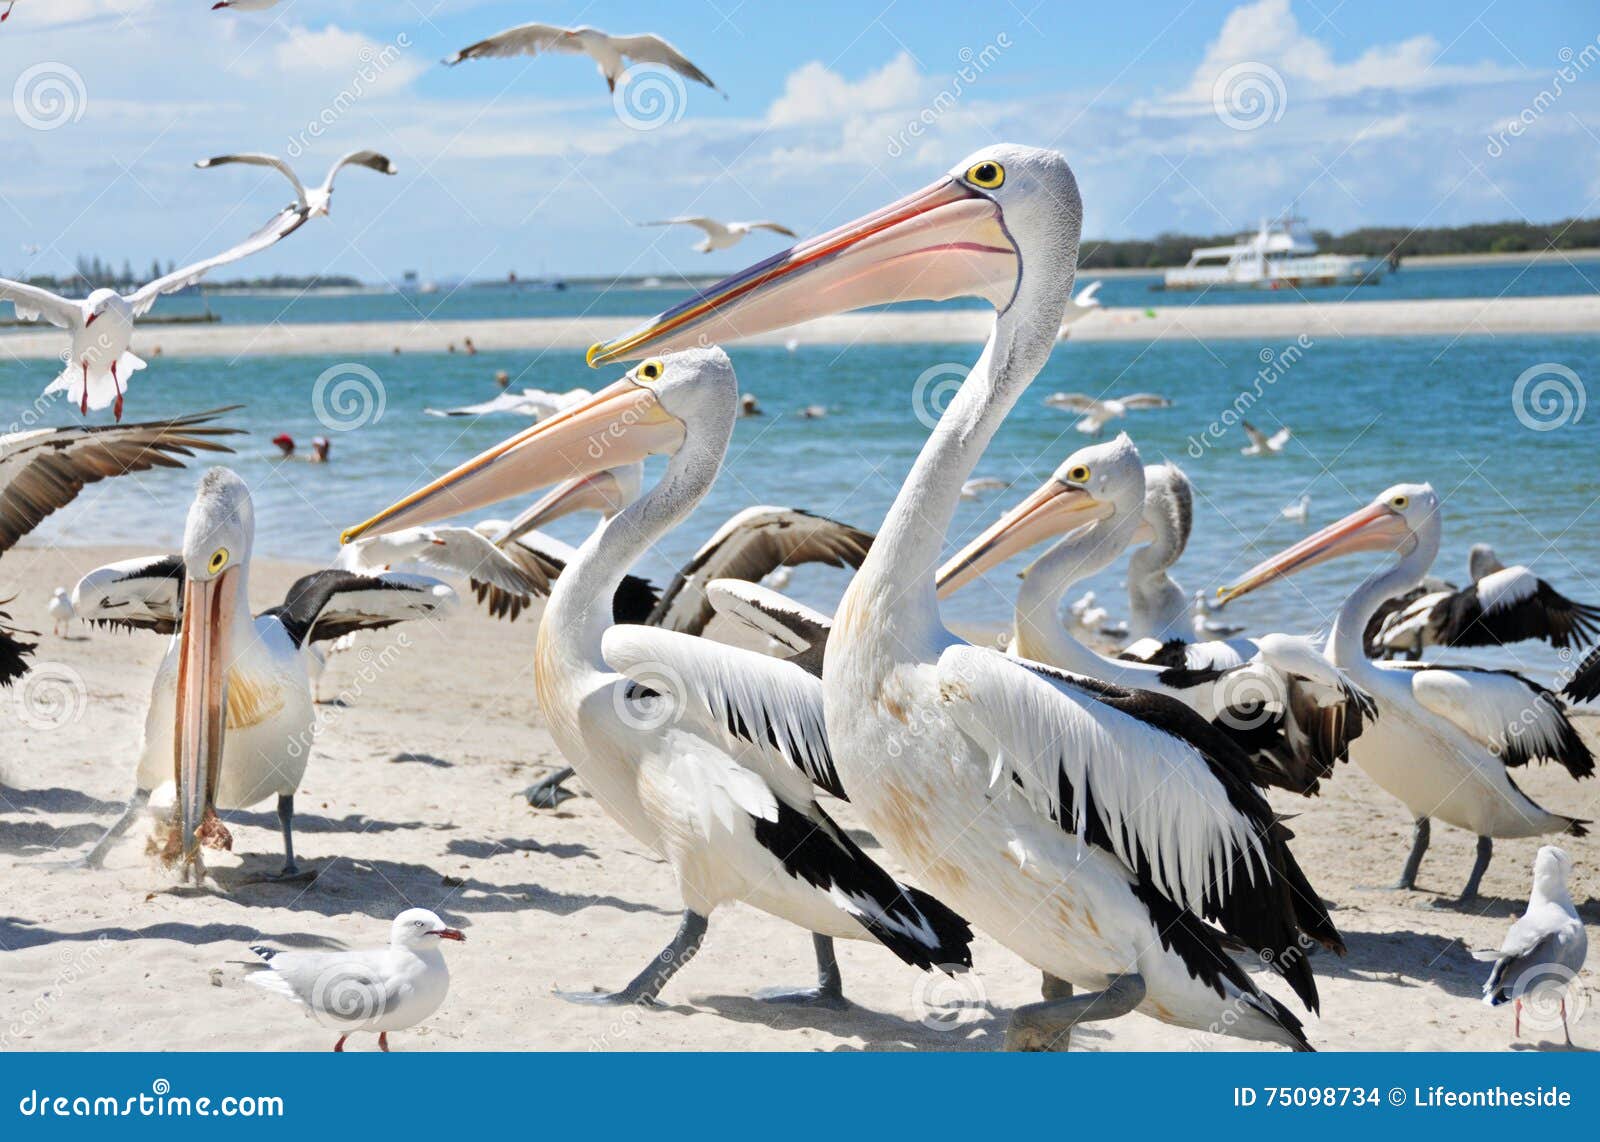 large flock of pelicans & sea birds on beautiful beaches of gold coast, australia